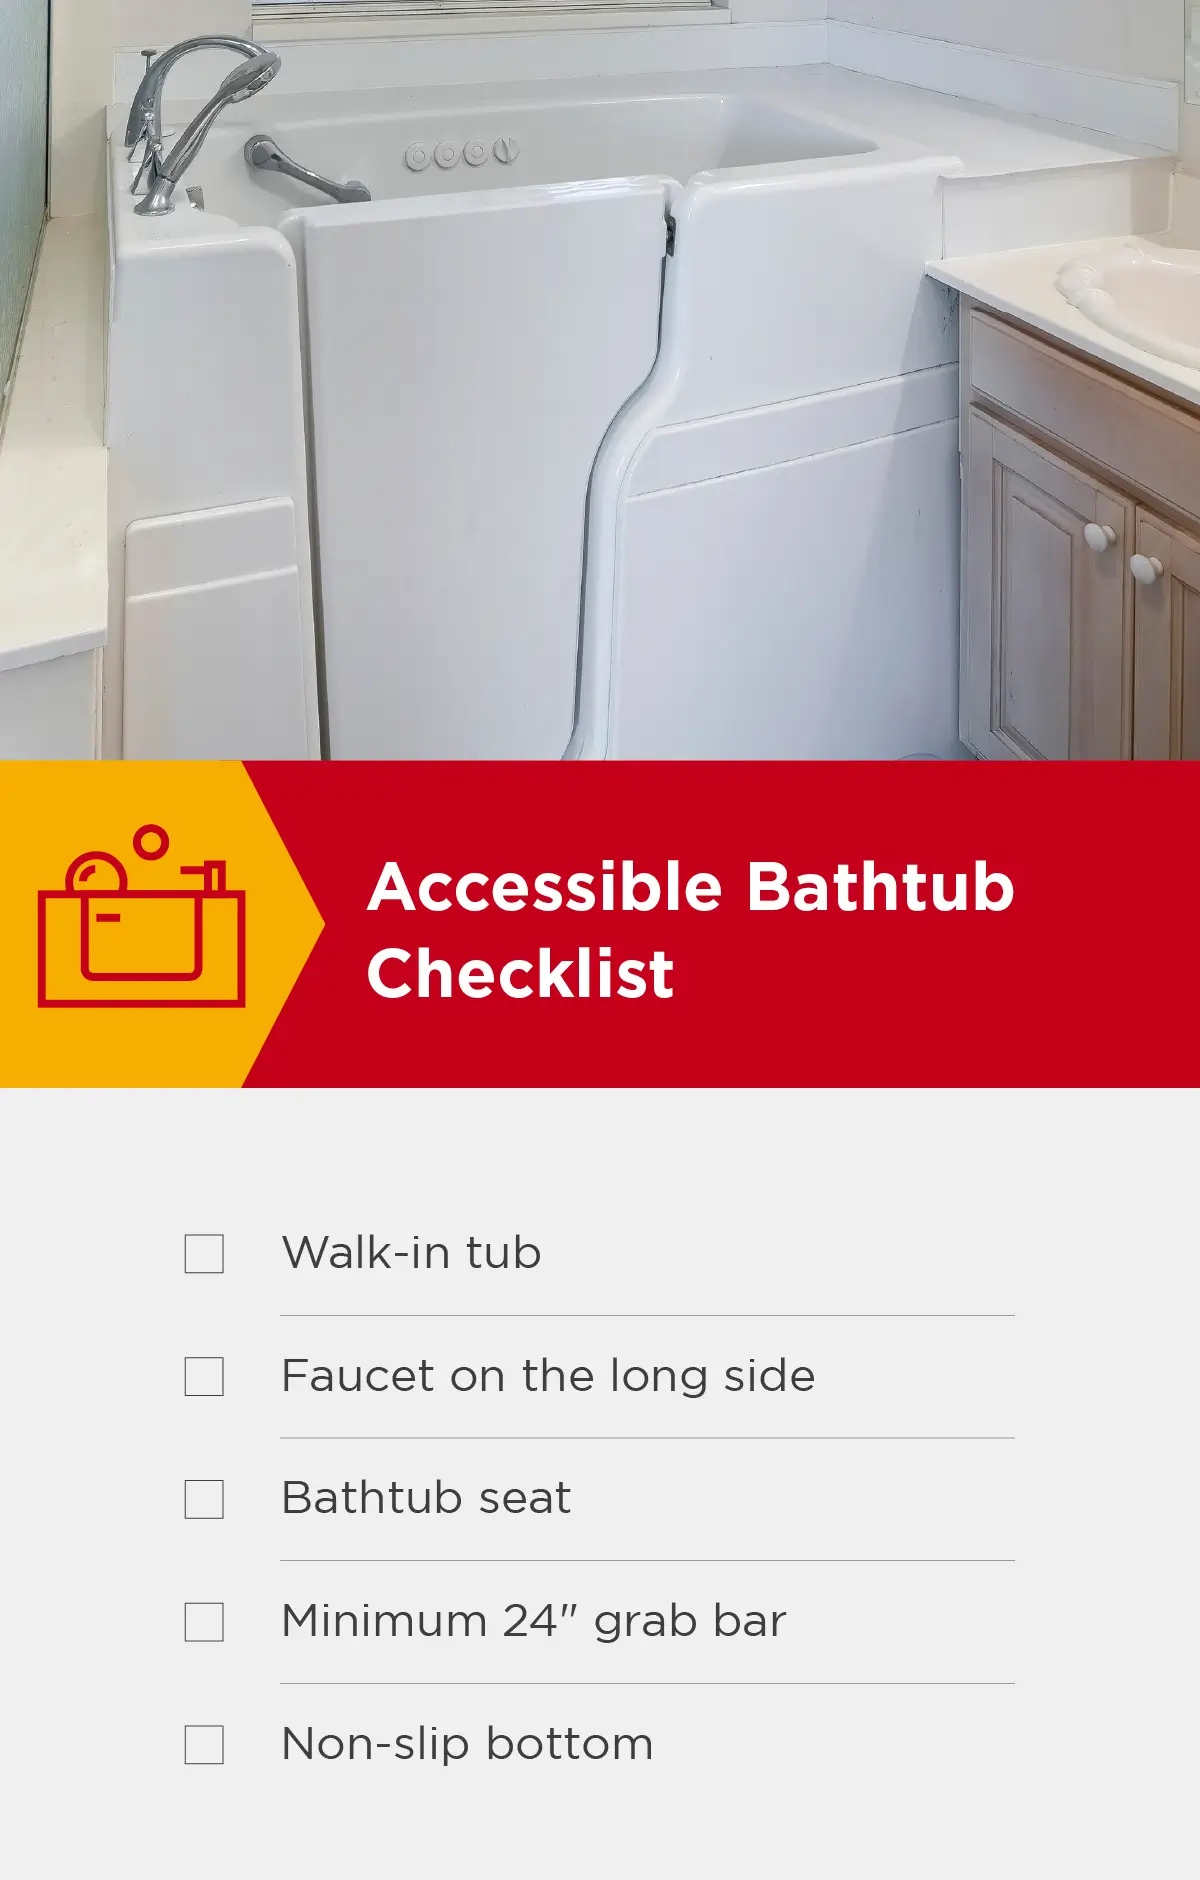 Accessible bathtub checklist